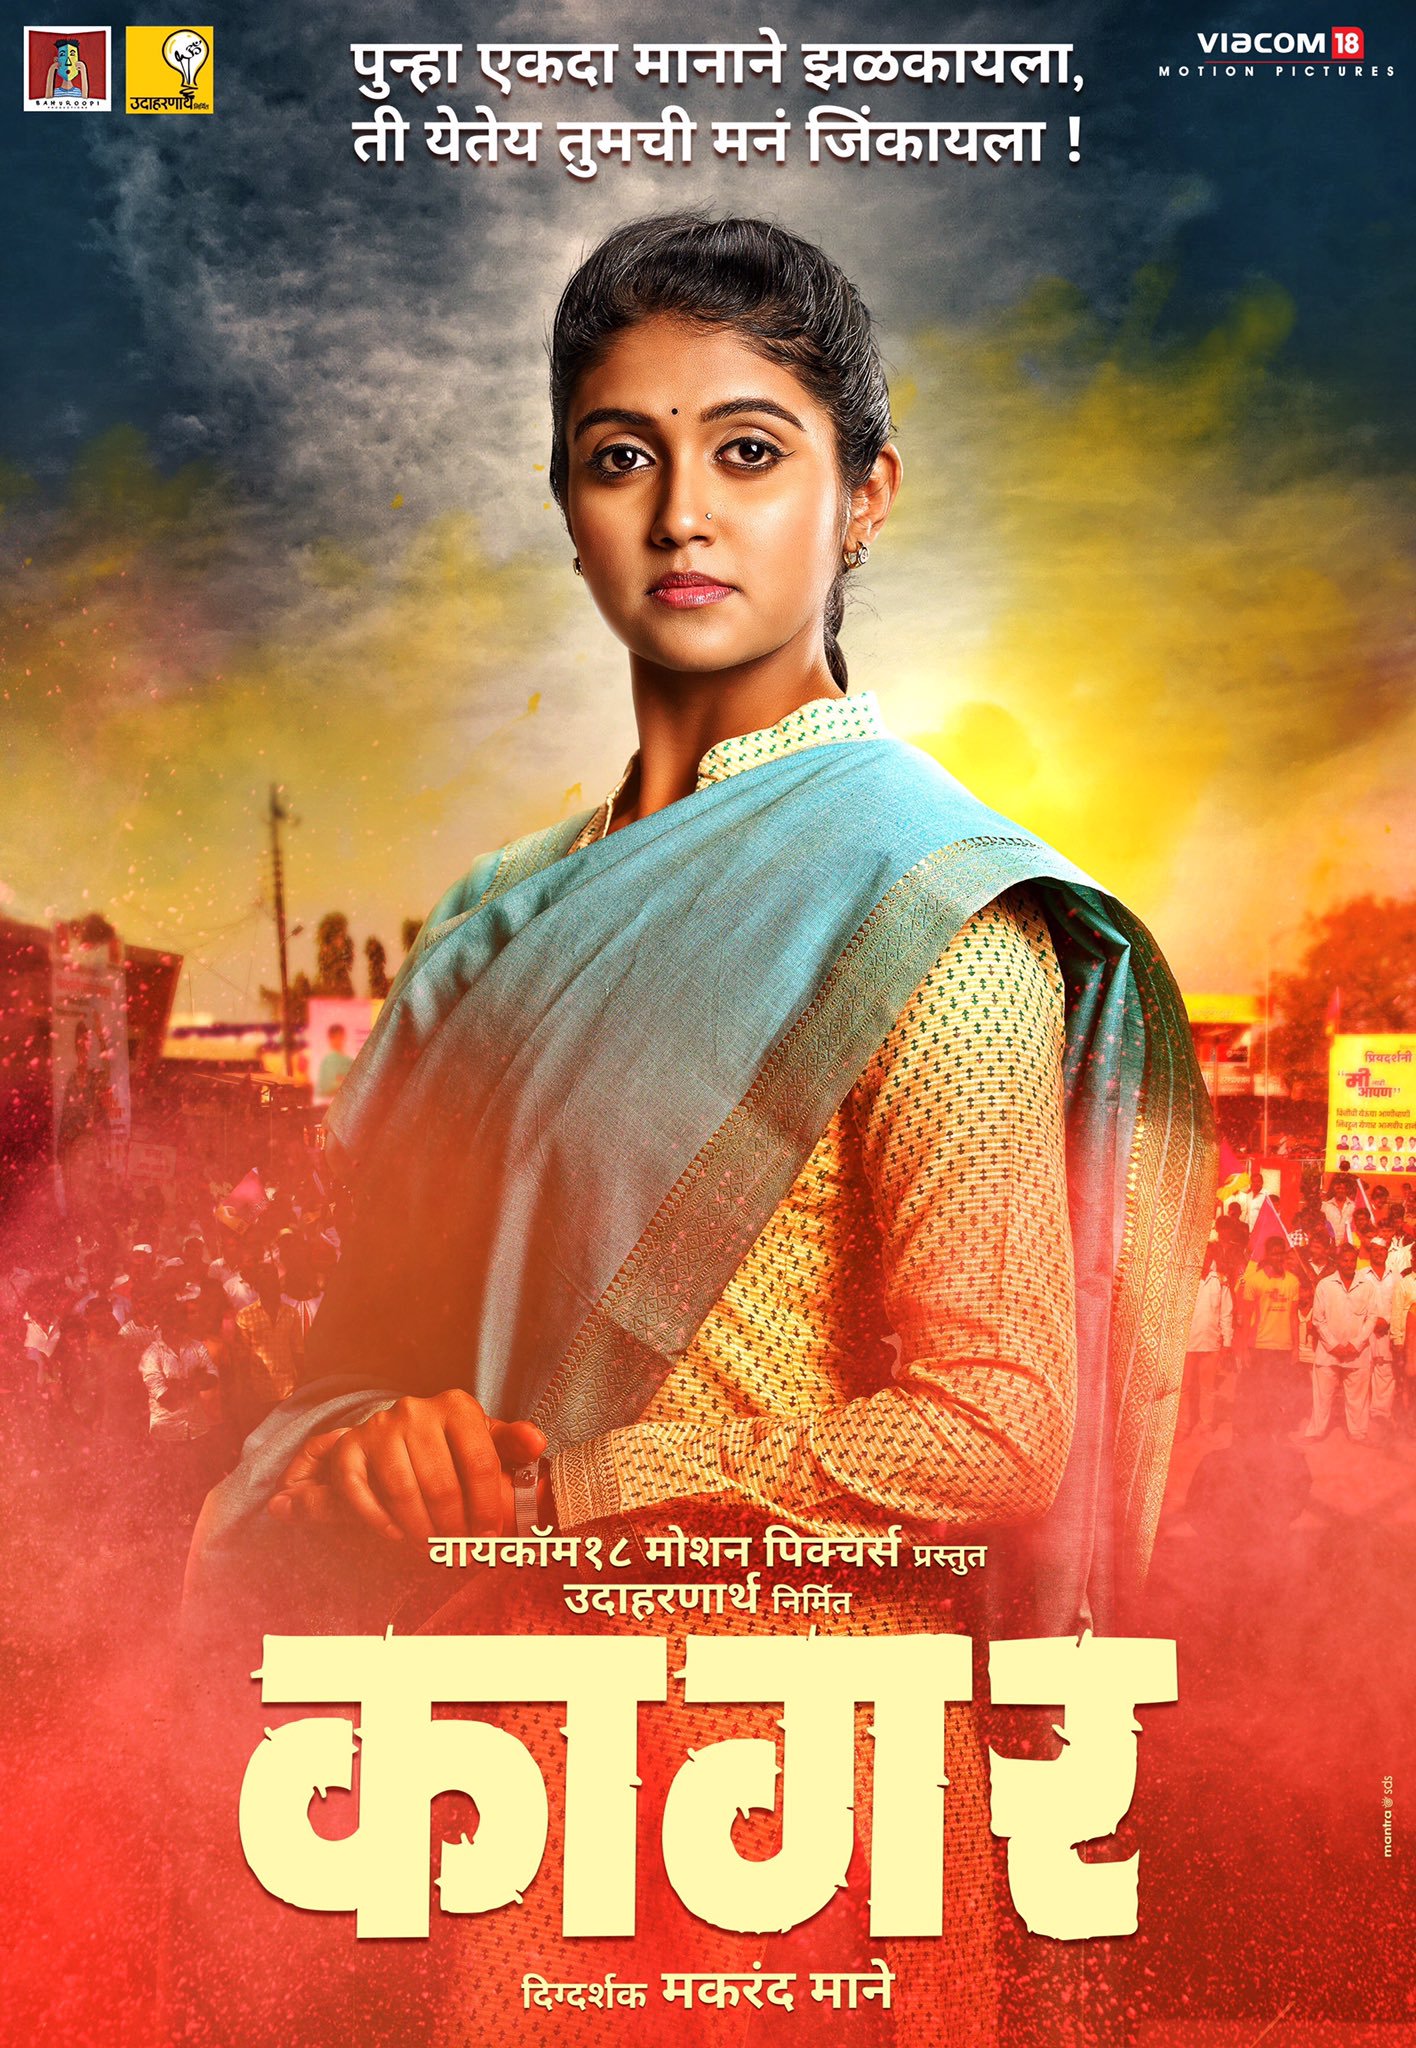 Kagar Marathi Movie Poster - HD Wallpaper 